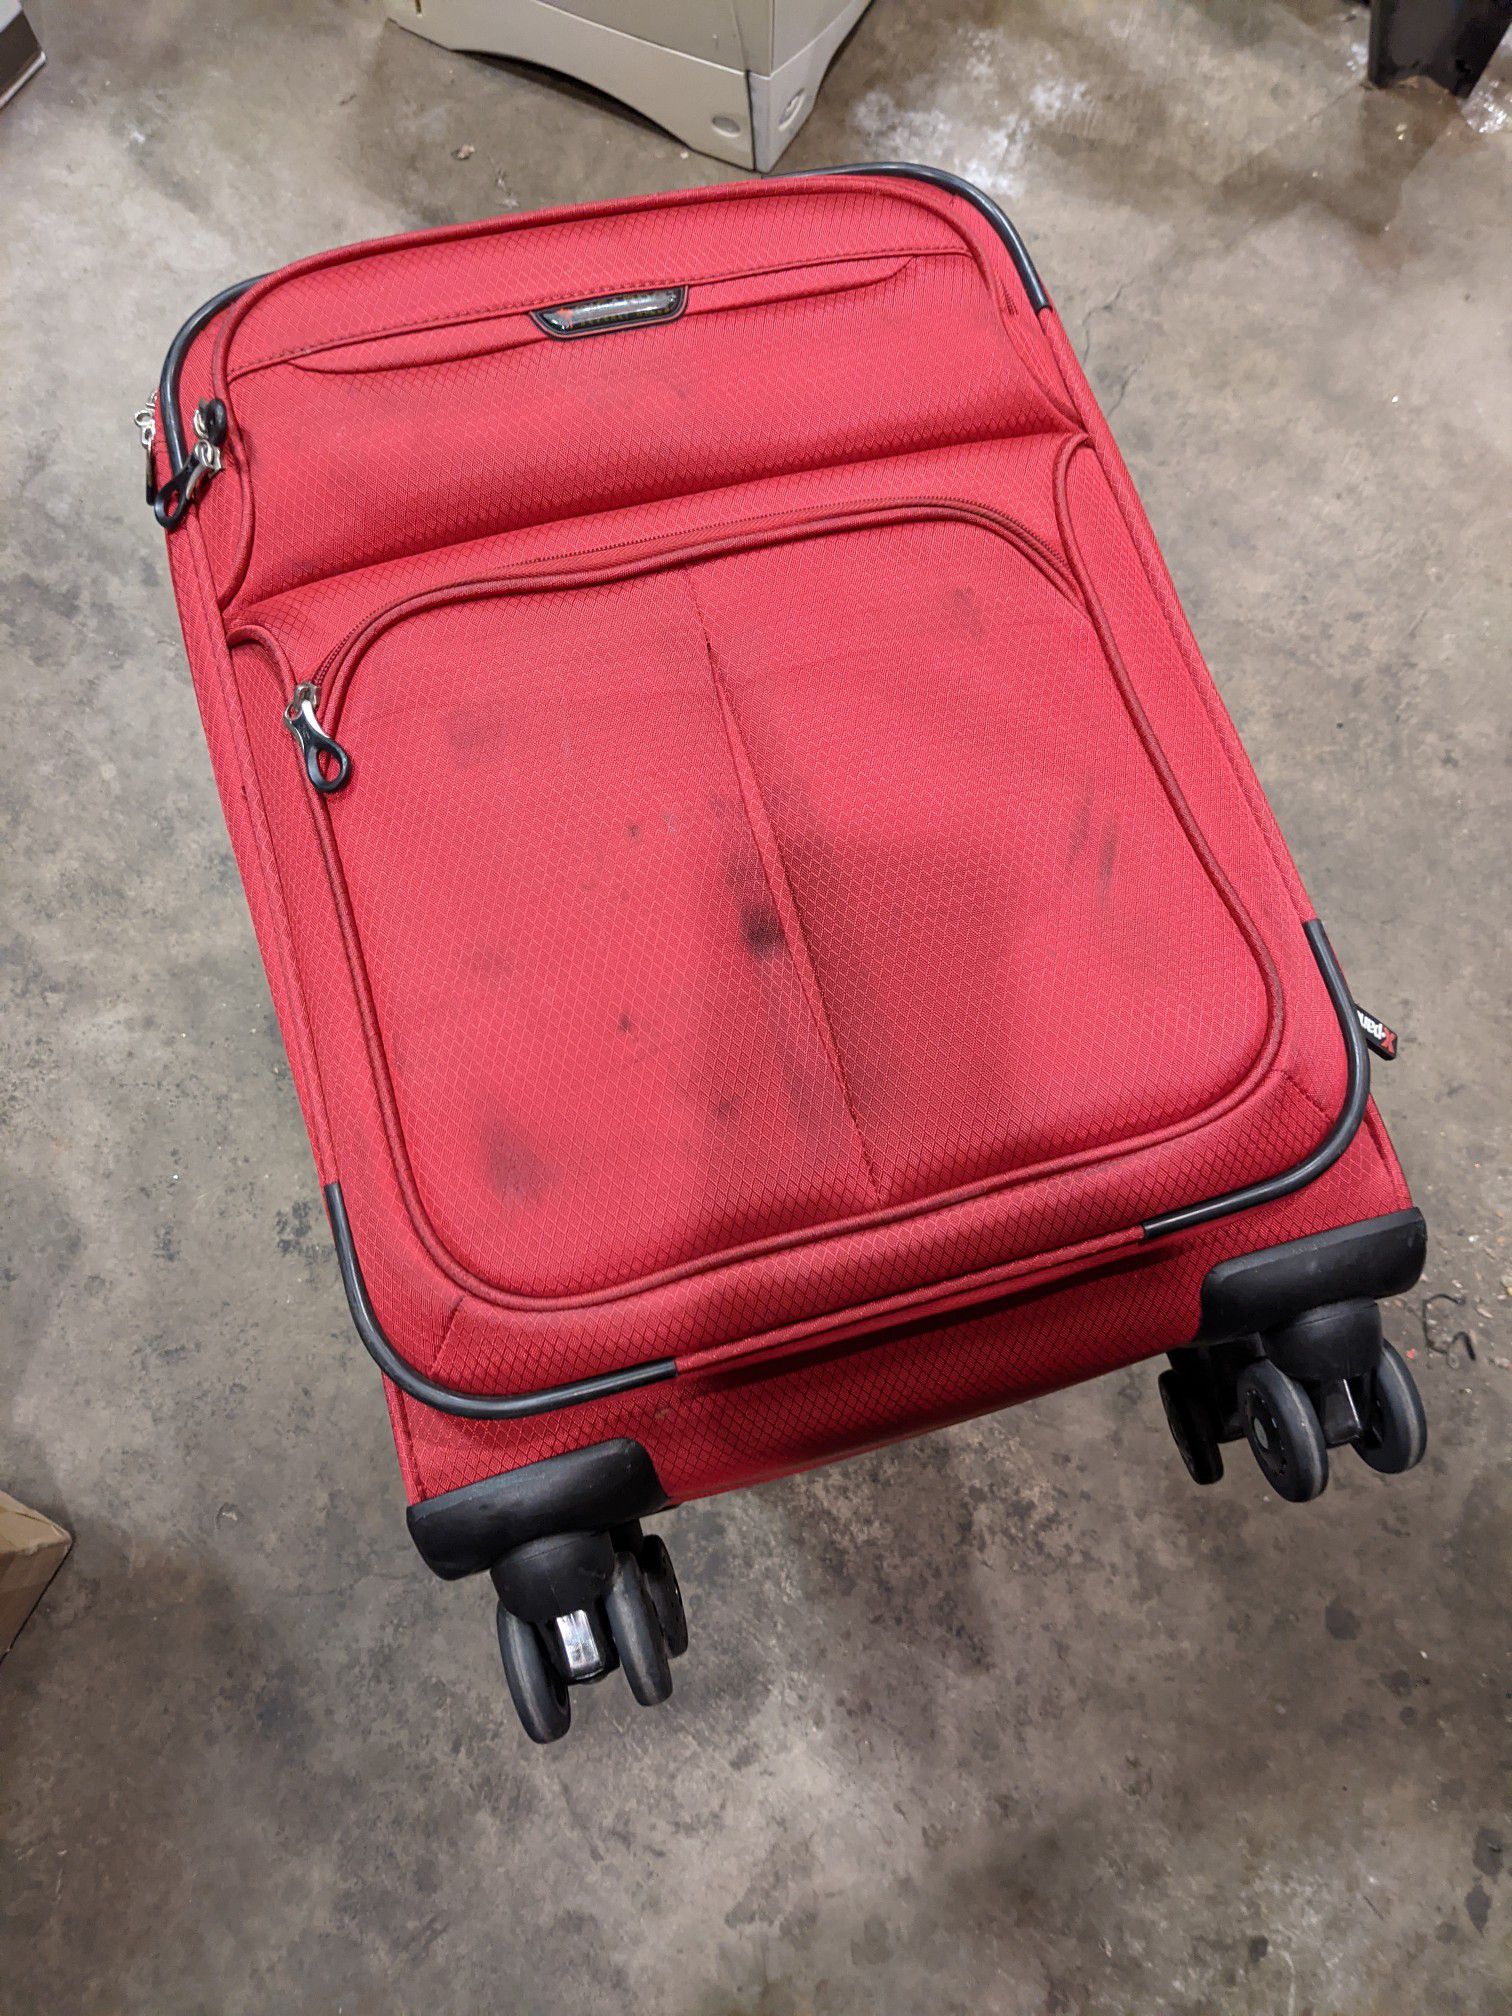 Ricardo Zero Gravity Carry-On Luggage